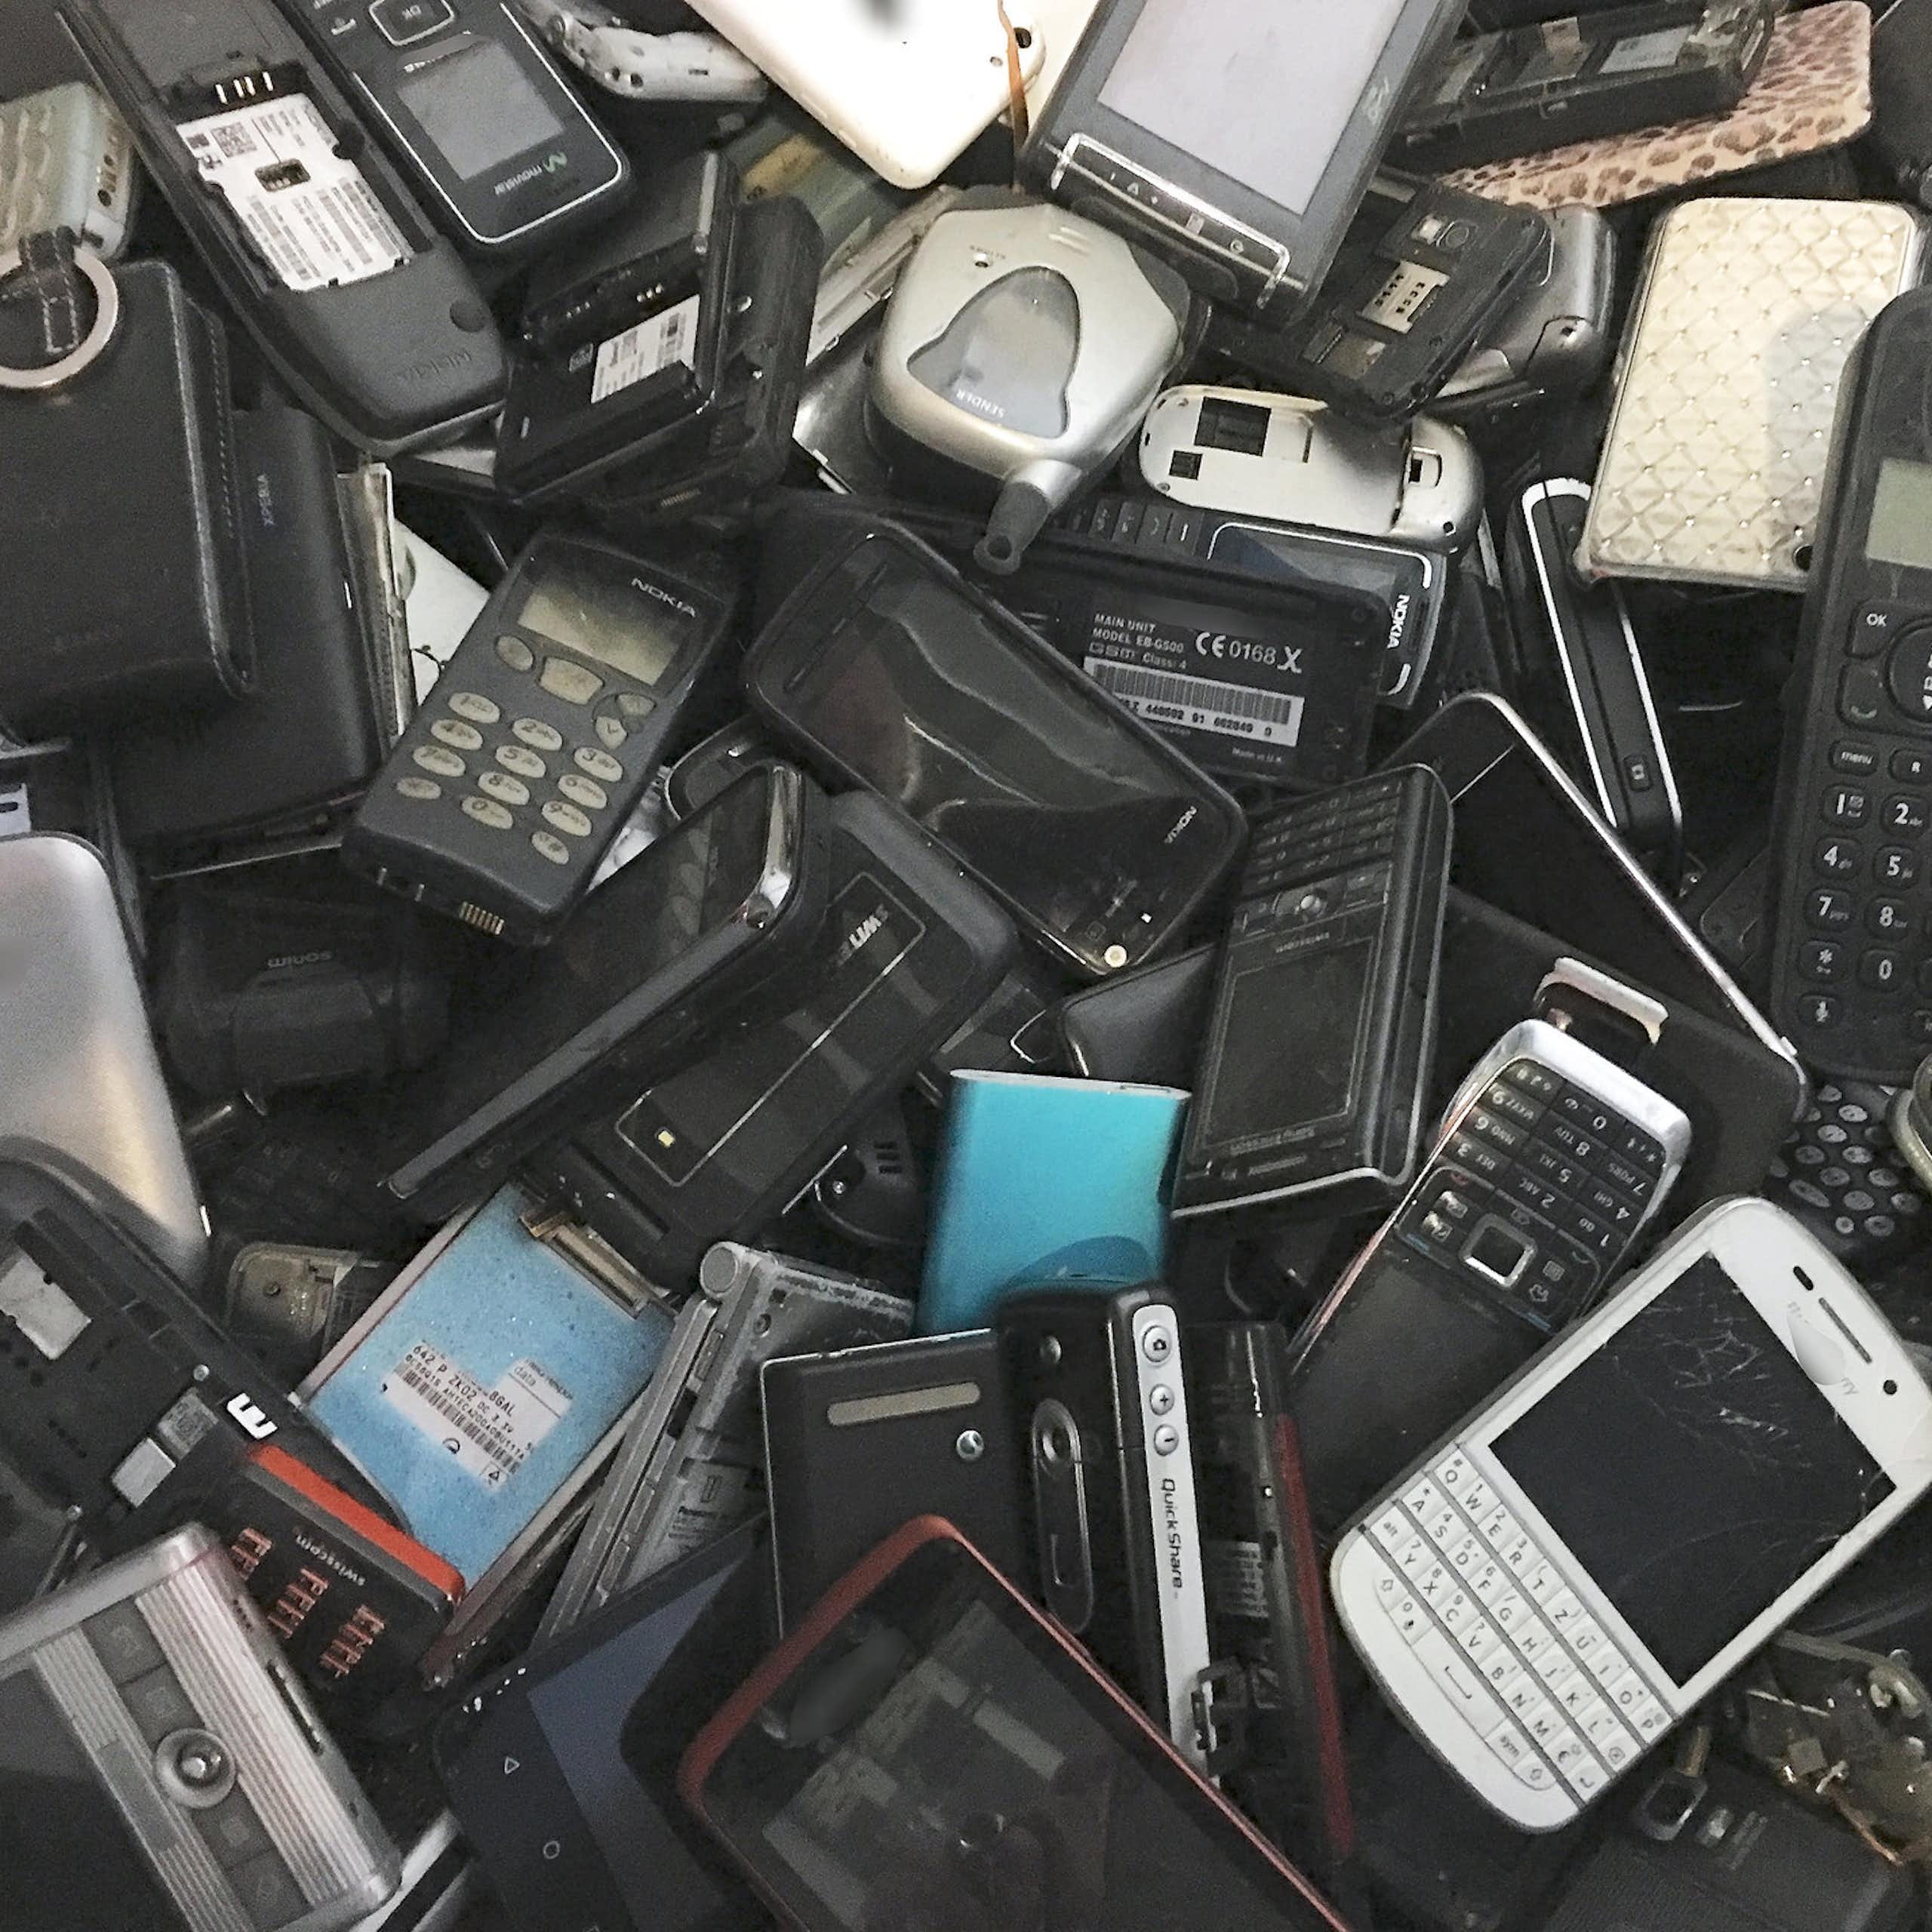 Un tas de téléphones et de smartphones usagés